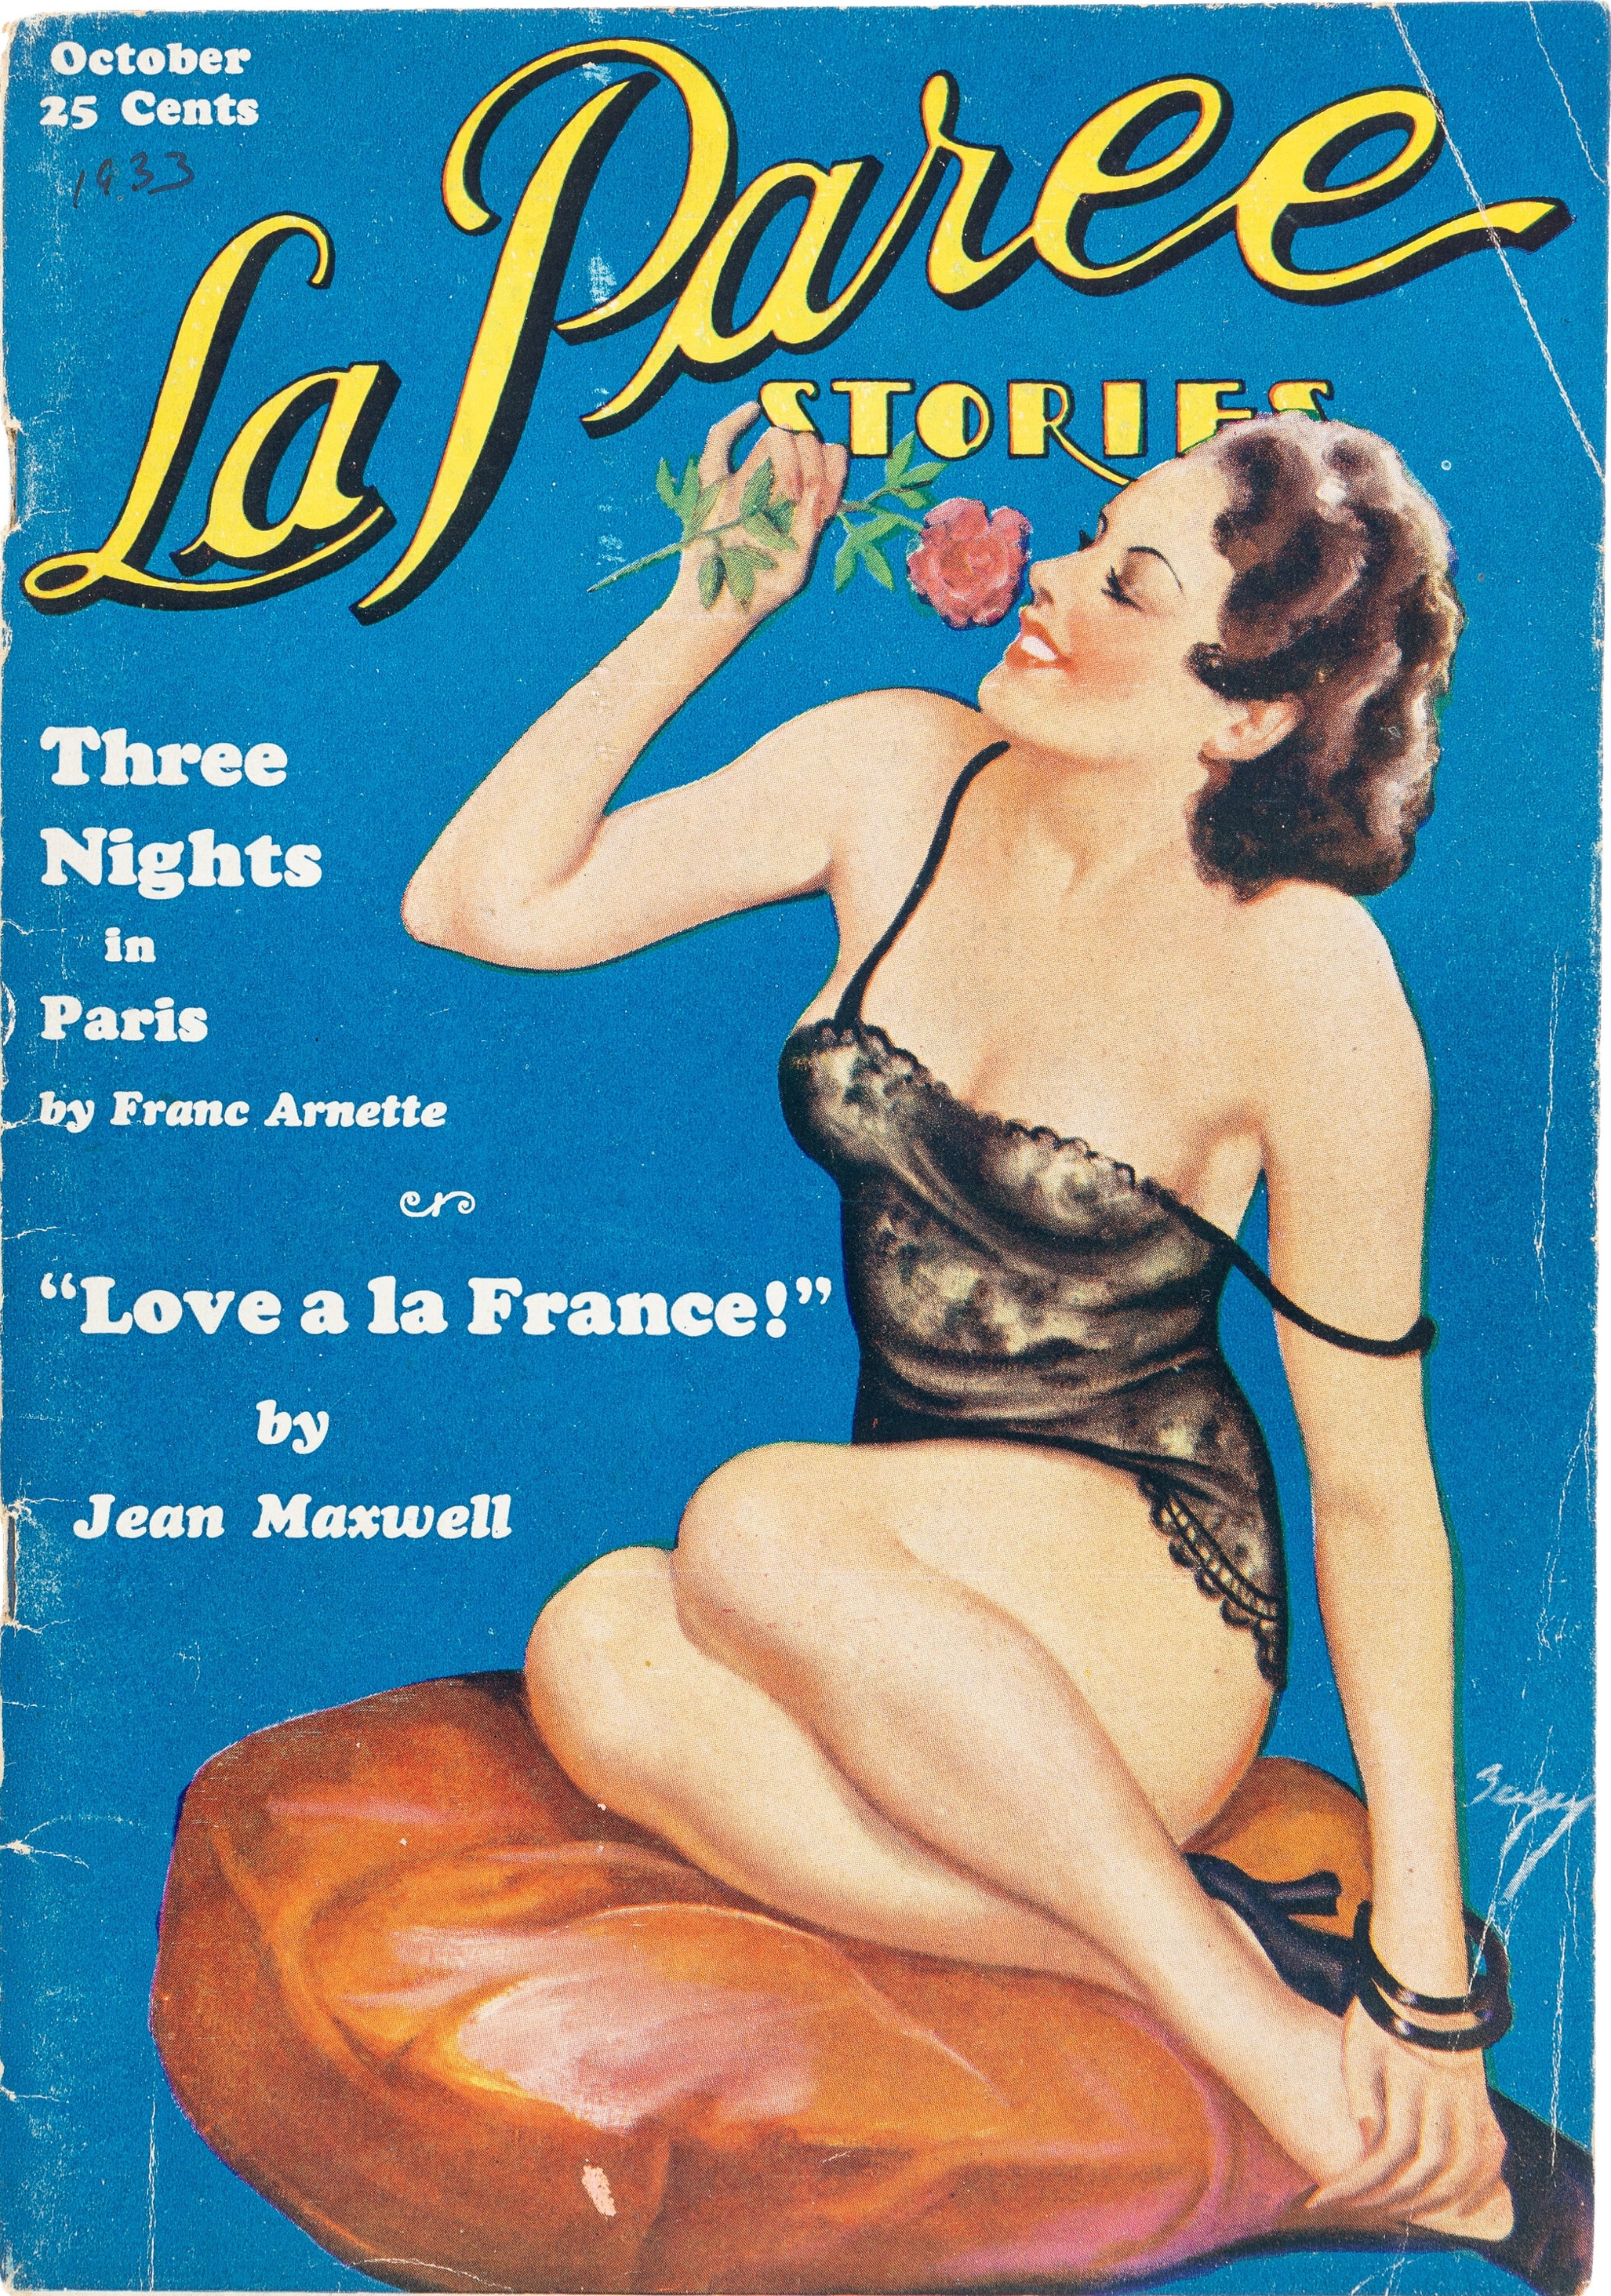 La Paree Stories - October 1933